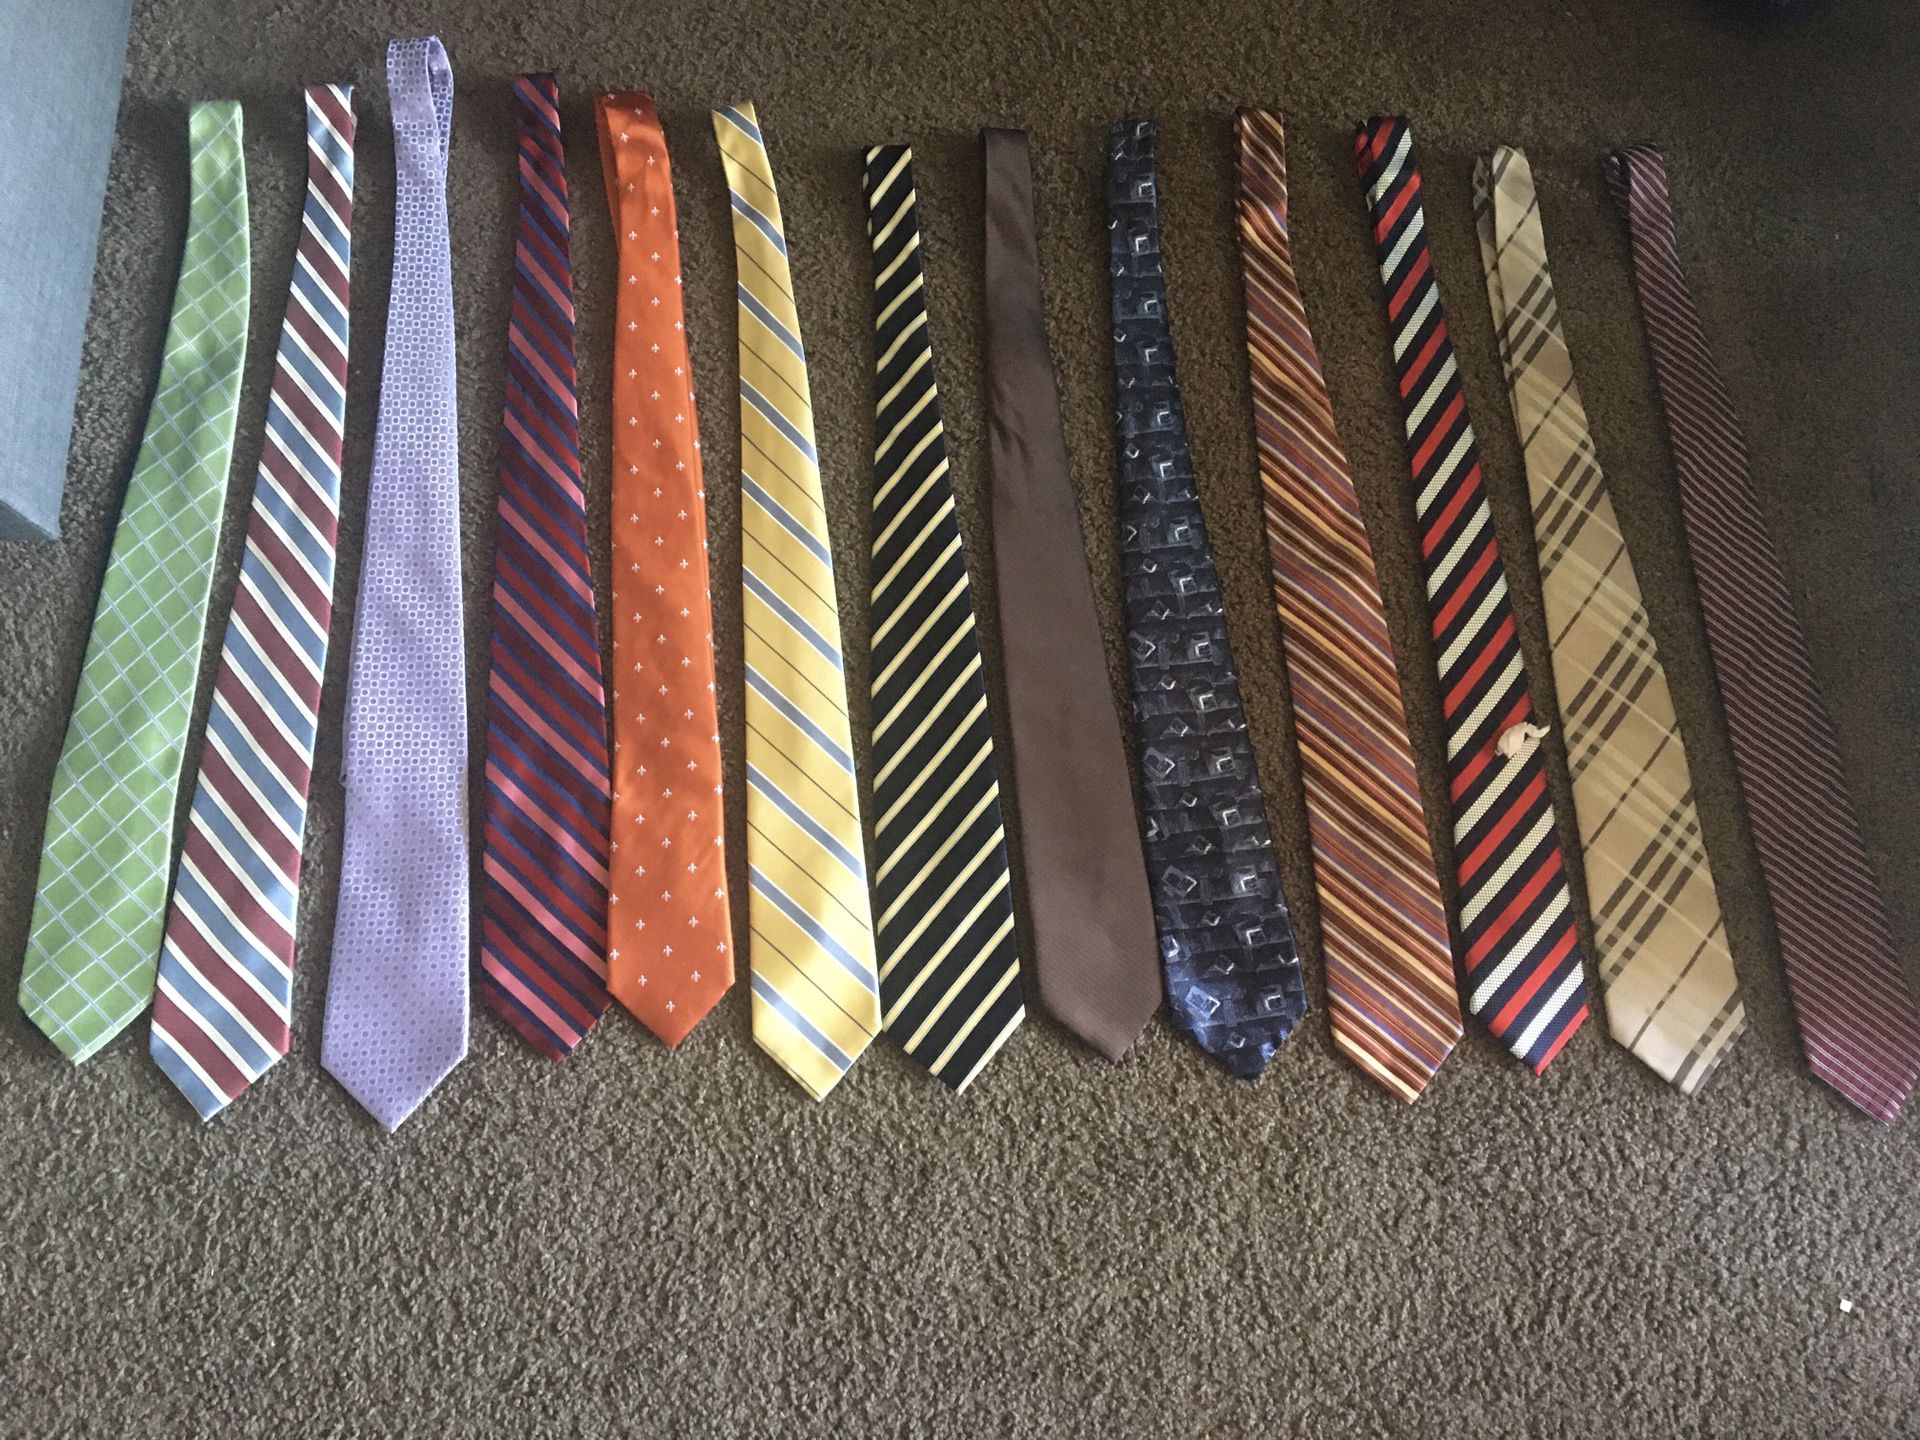 Lot of 15 ties